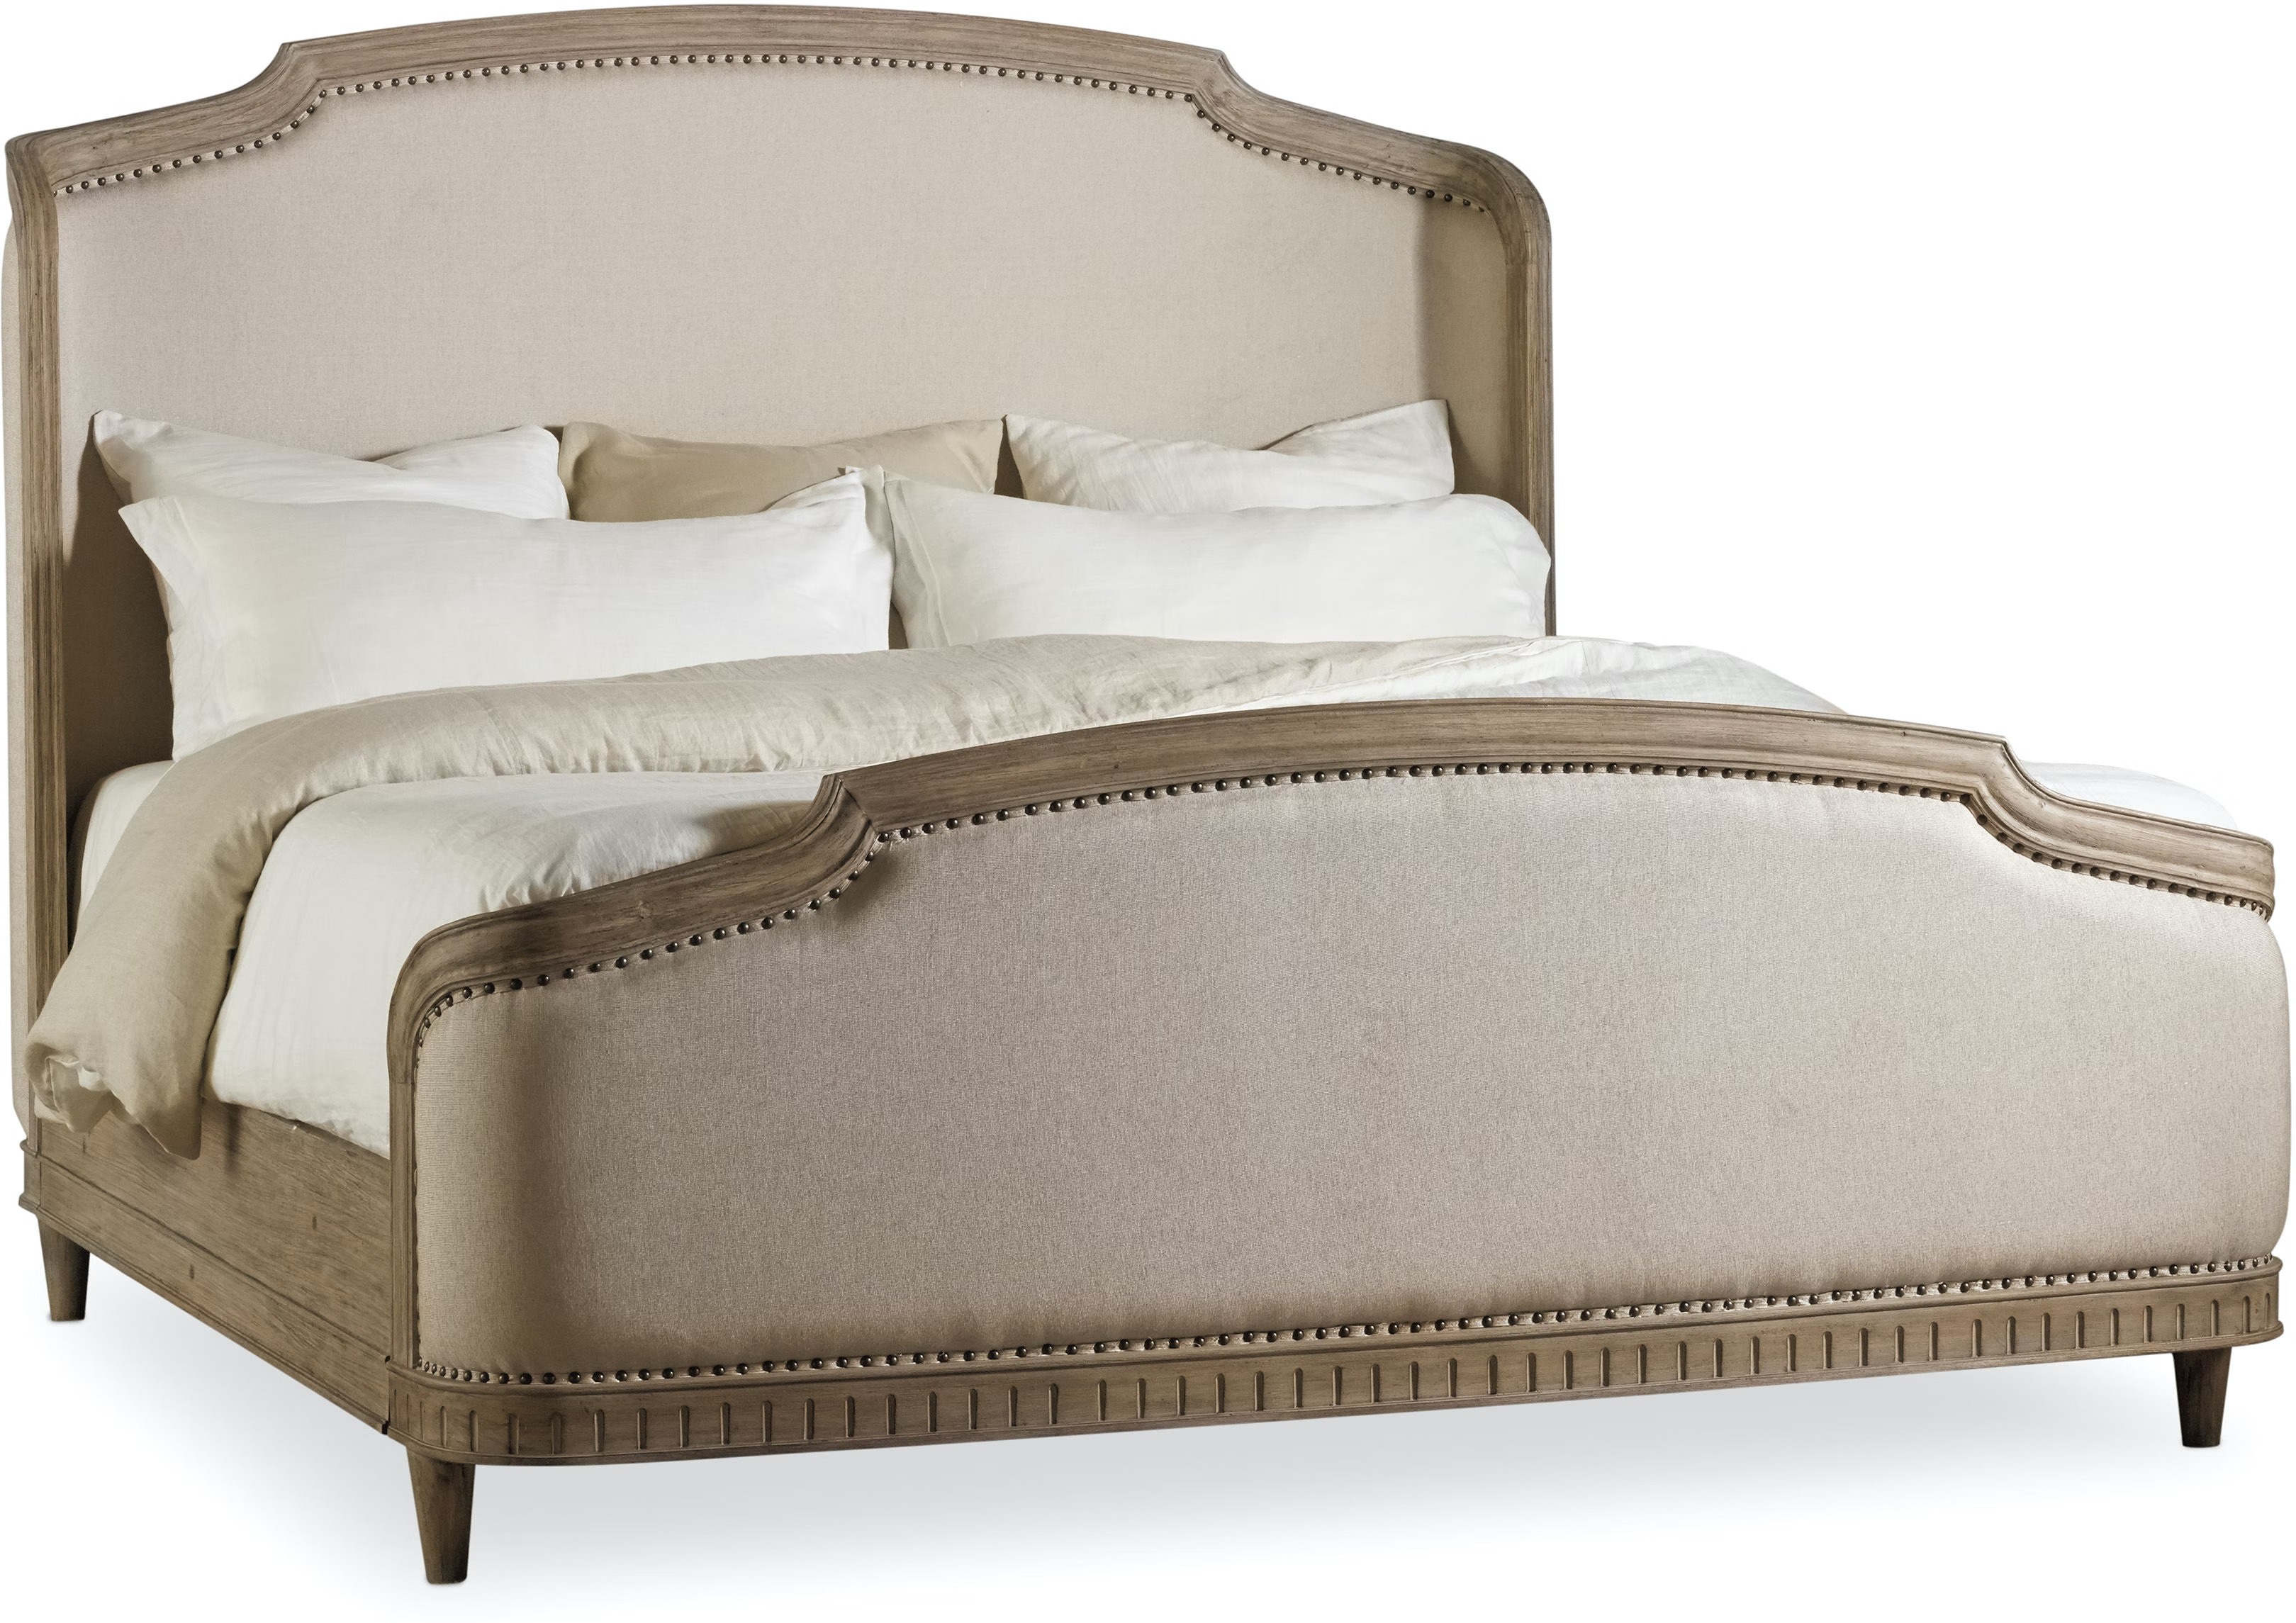 Hooker Furniture Bedroom Corsica Queen Upholstery Shelter Bed